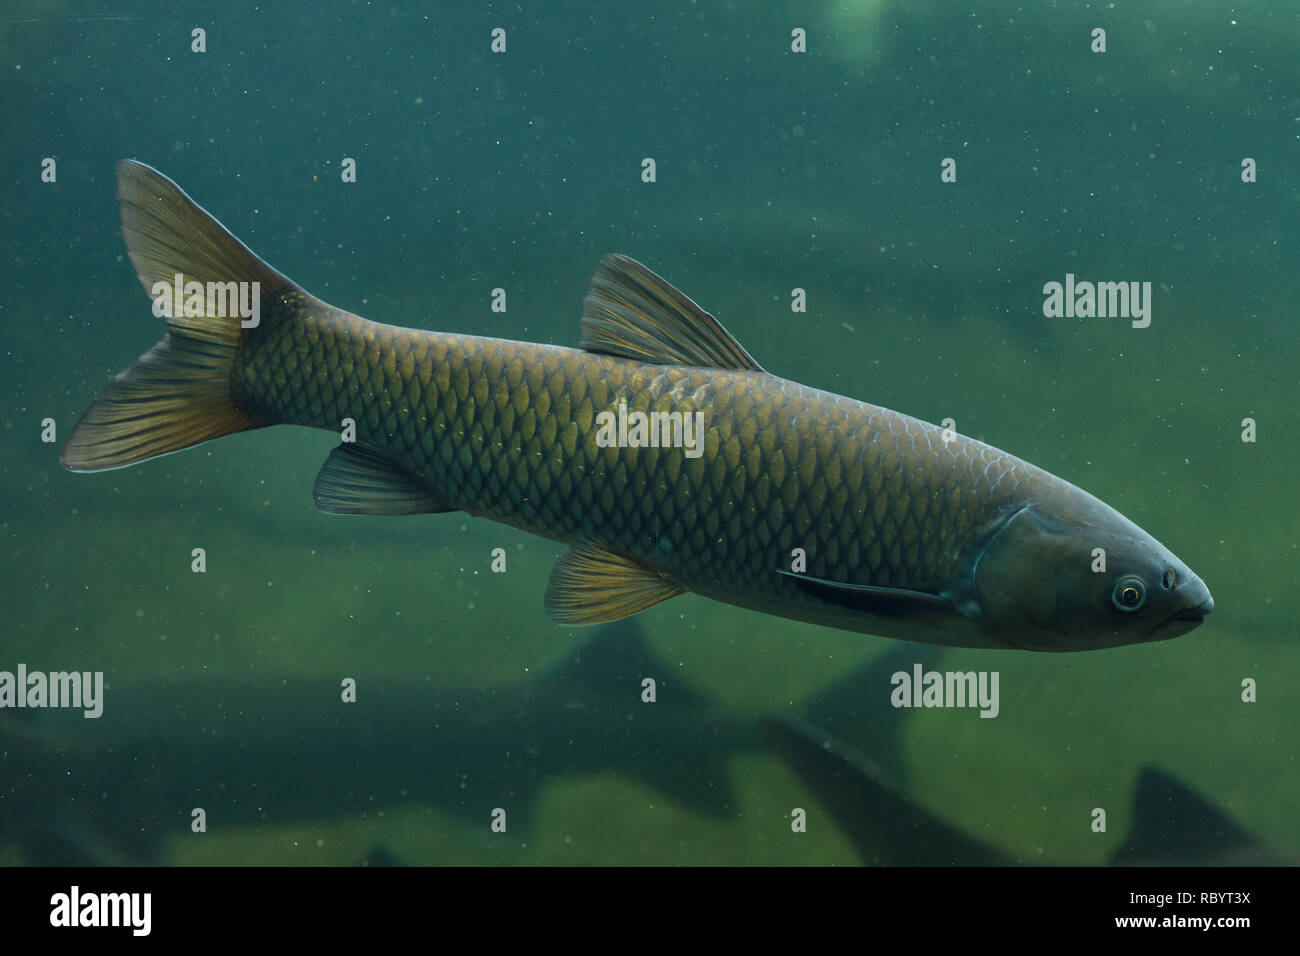 Grass carp (Ctenopharyngodon idella). Freshwater fish. Stock Photo